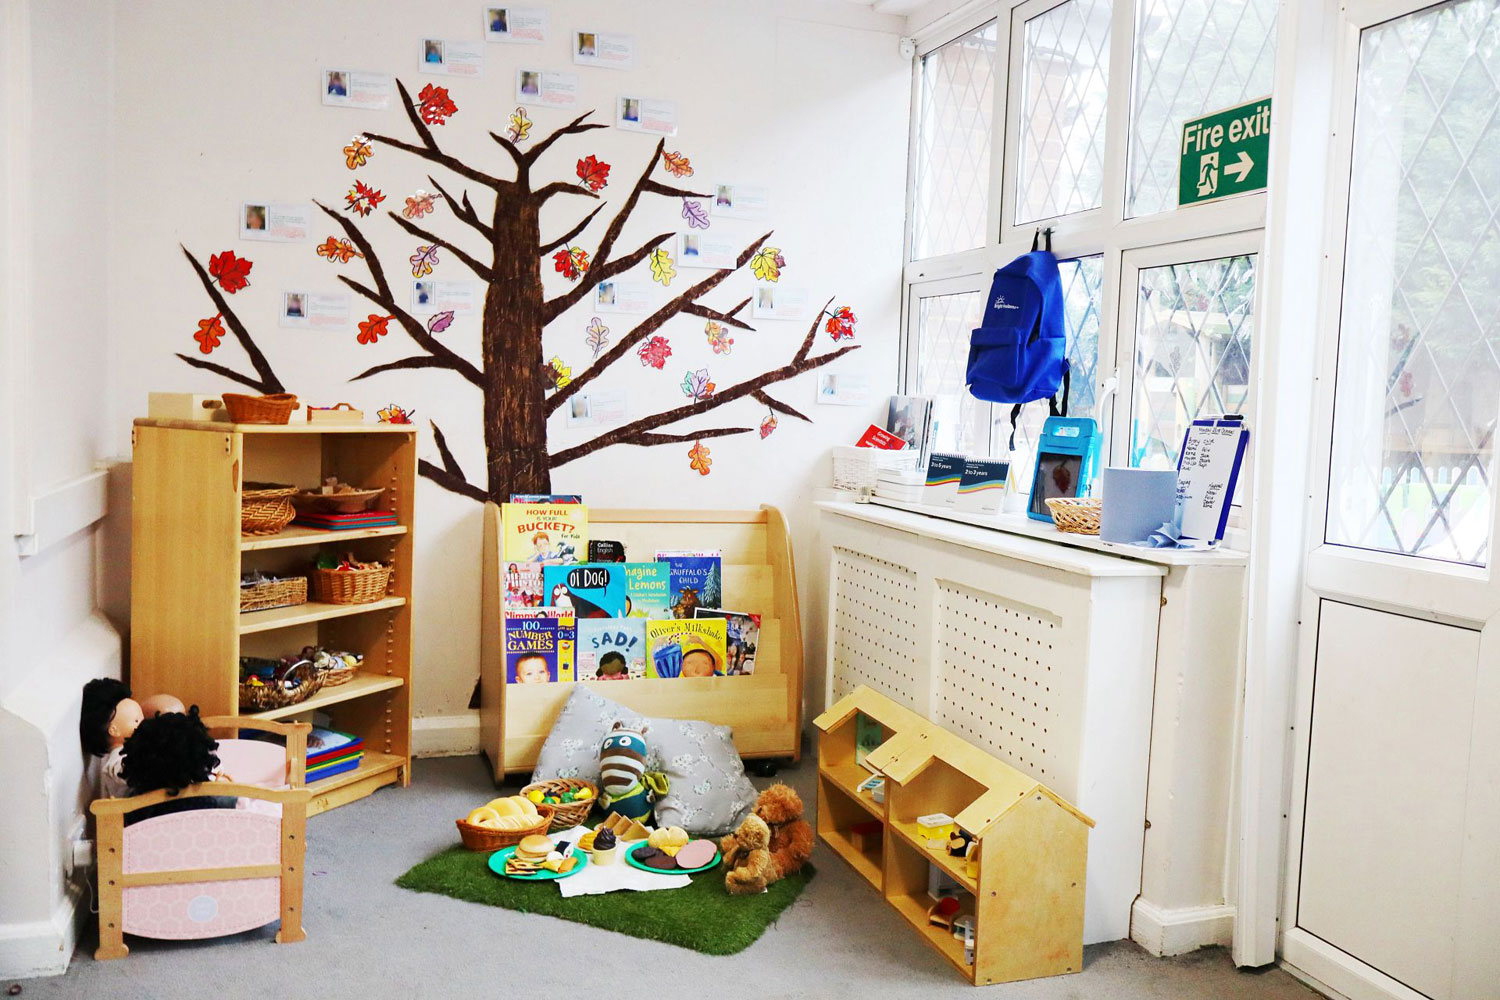 Tudor House Day Nursery and Preschool toddler reading corner